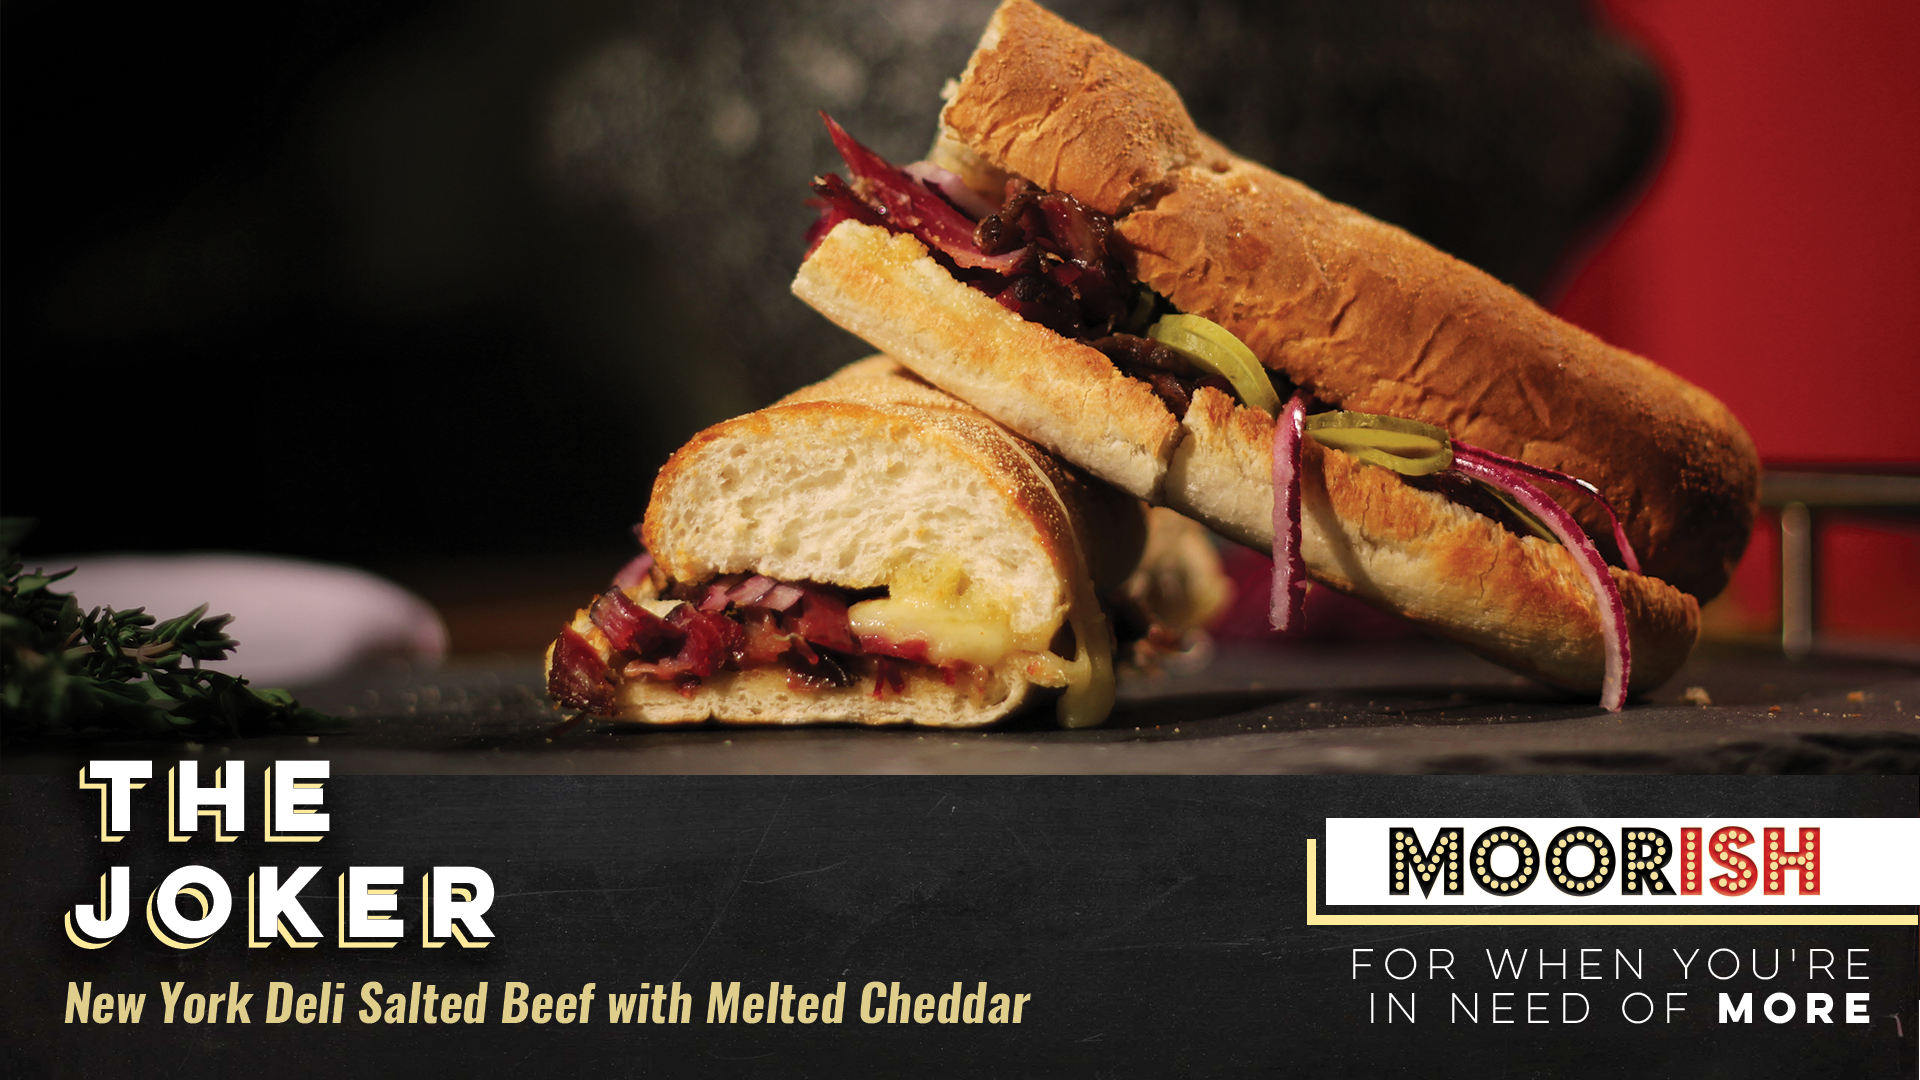 Moorish Sandwich Menu Ad 2.png